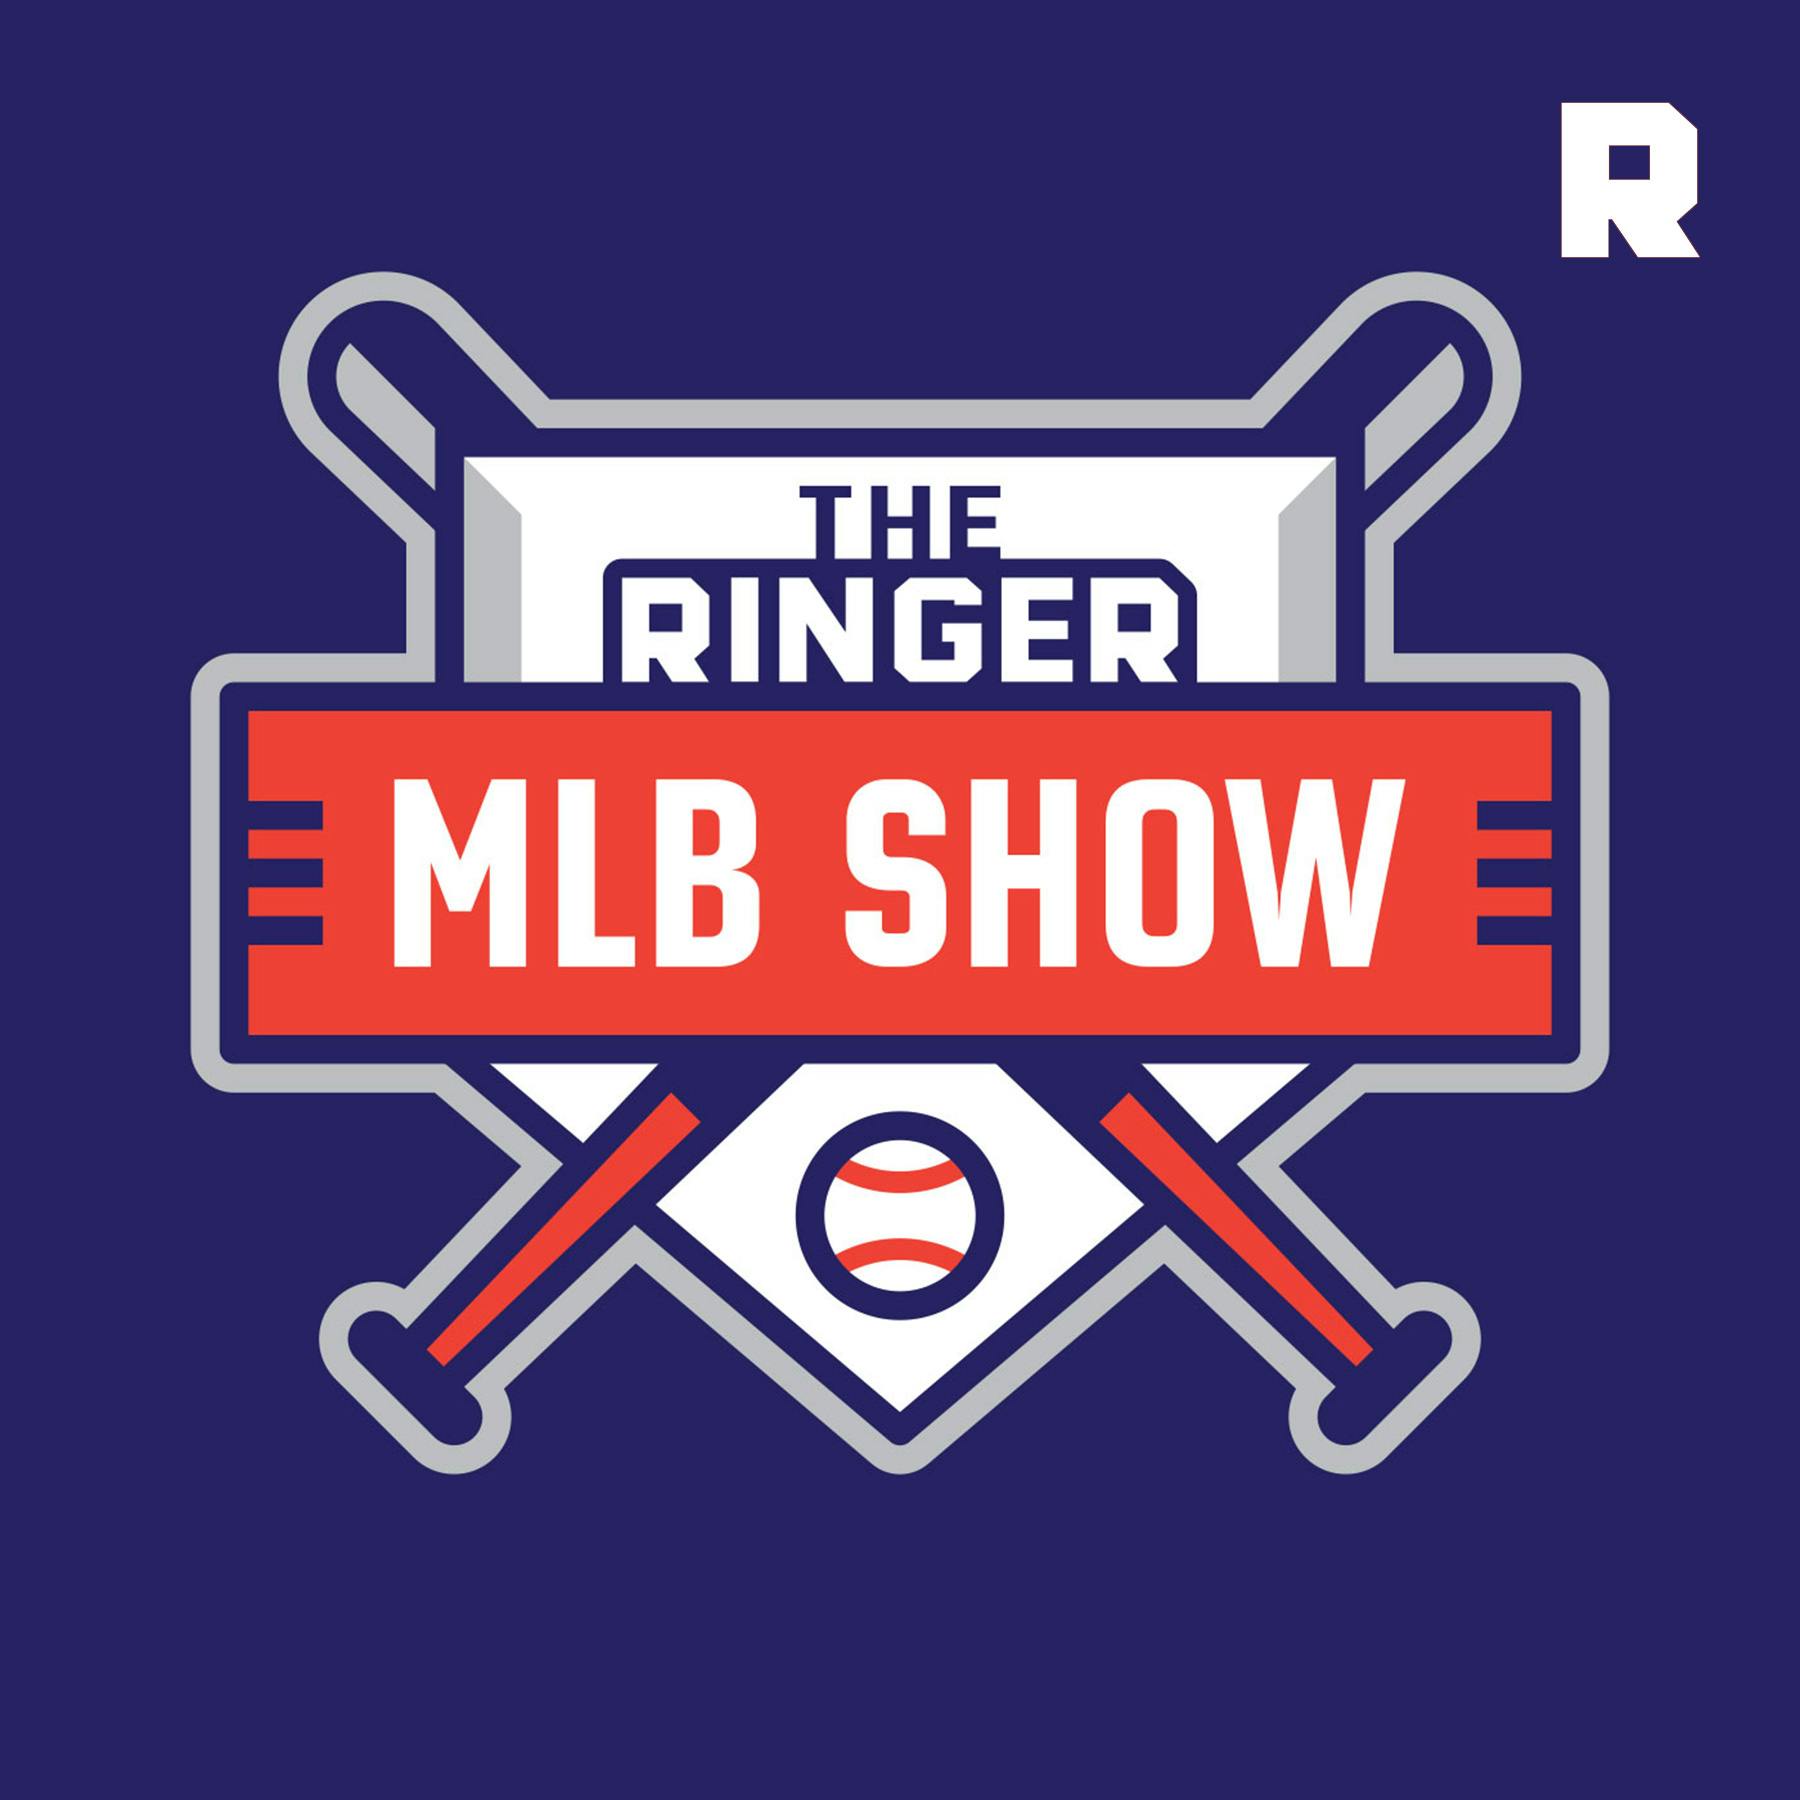 The Ringer MLB Show podcast show image